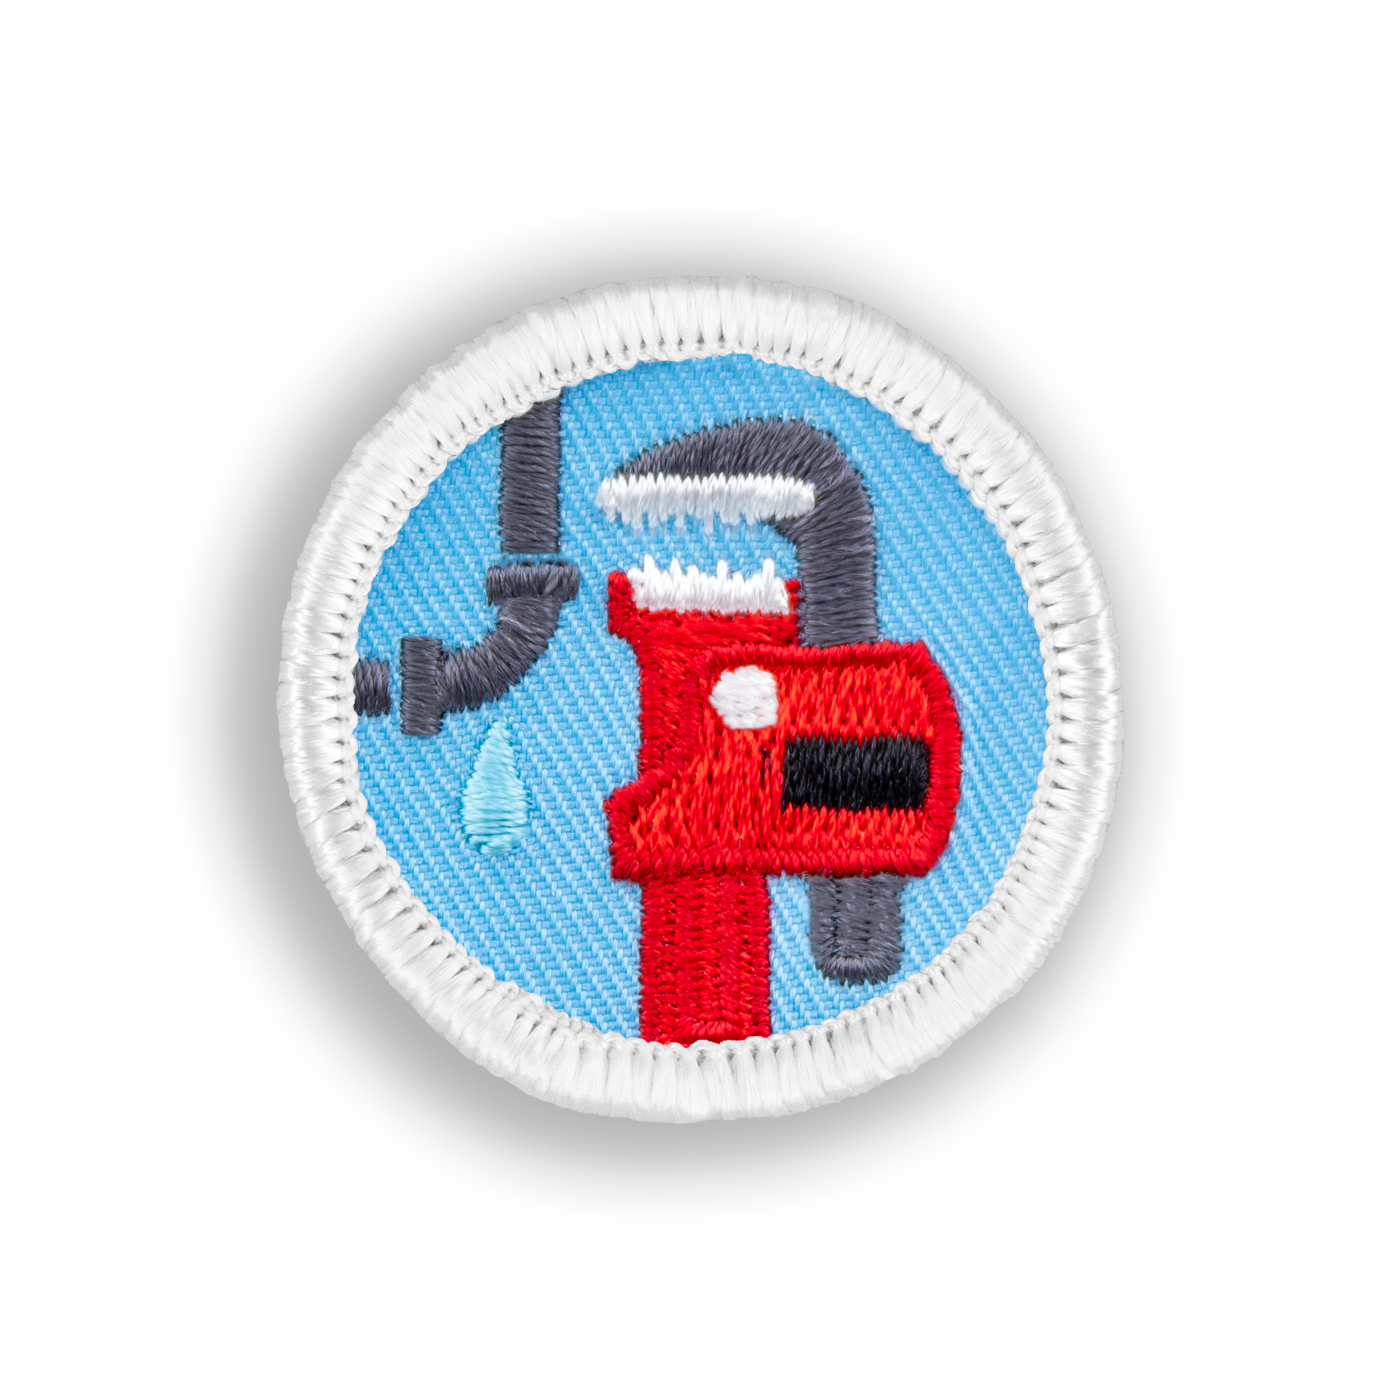 Handy Patch | Demerit Wear - Fake Merit Badges